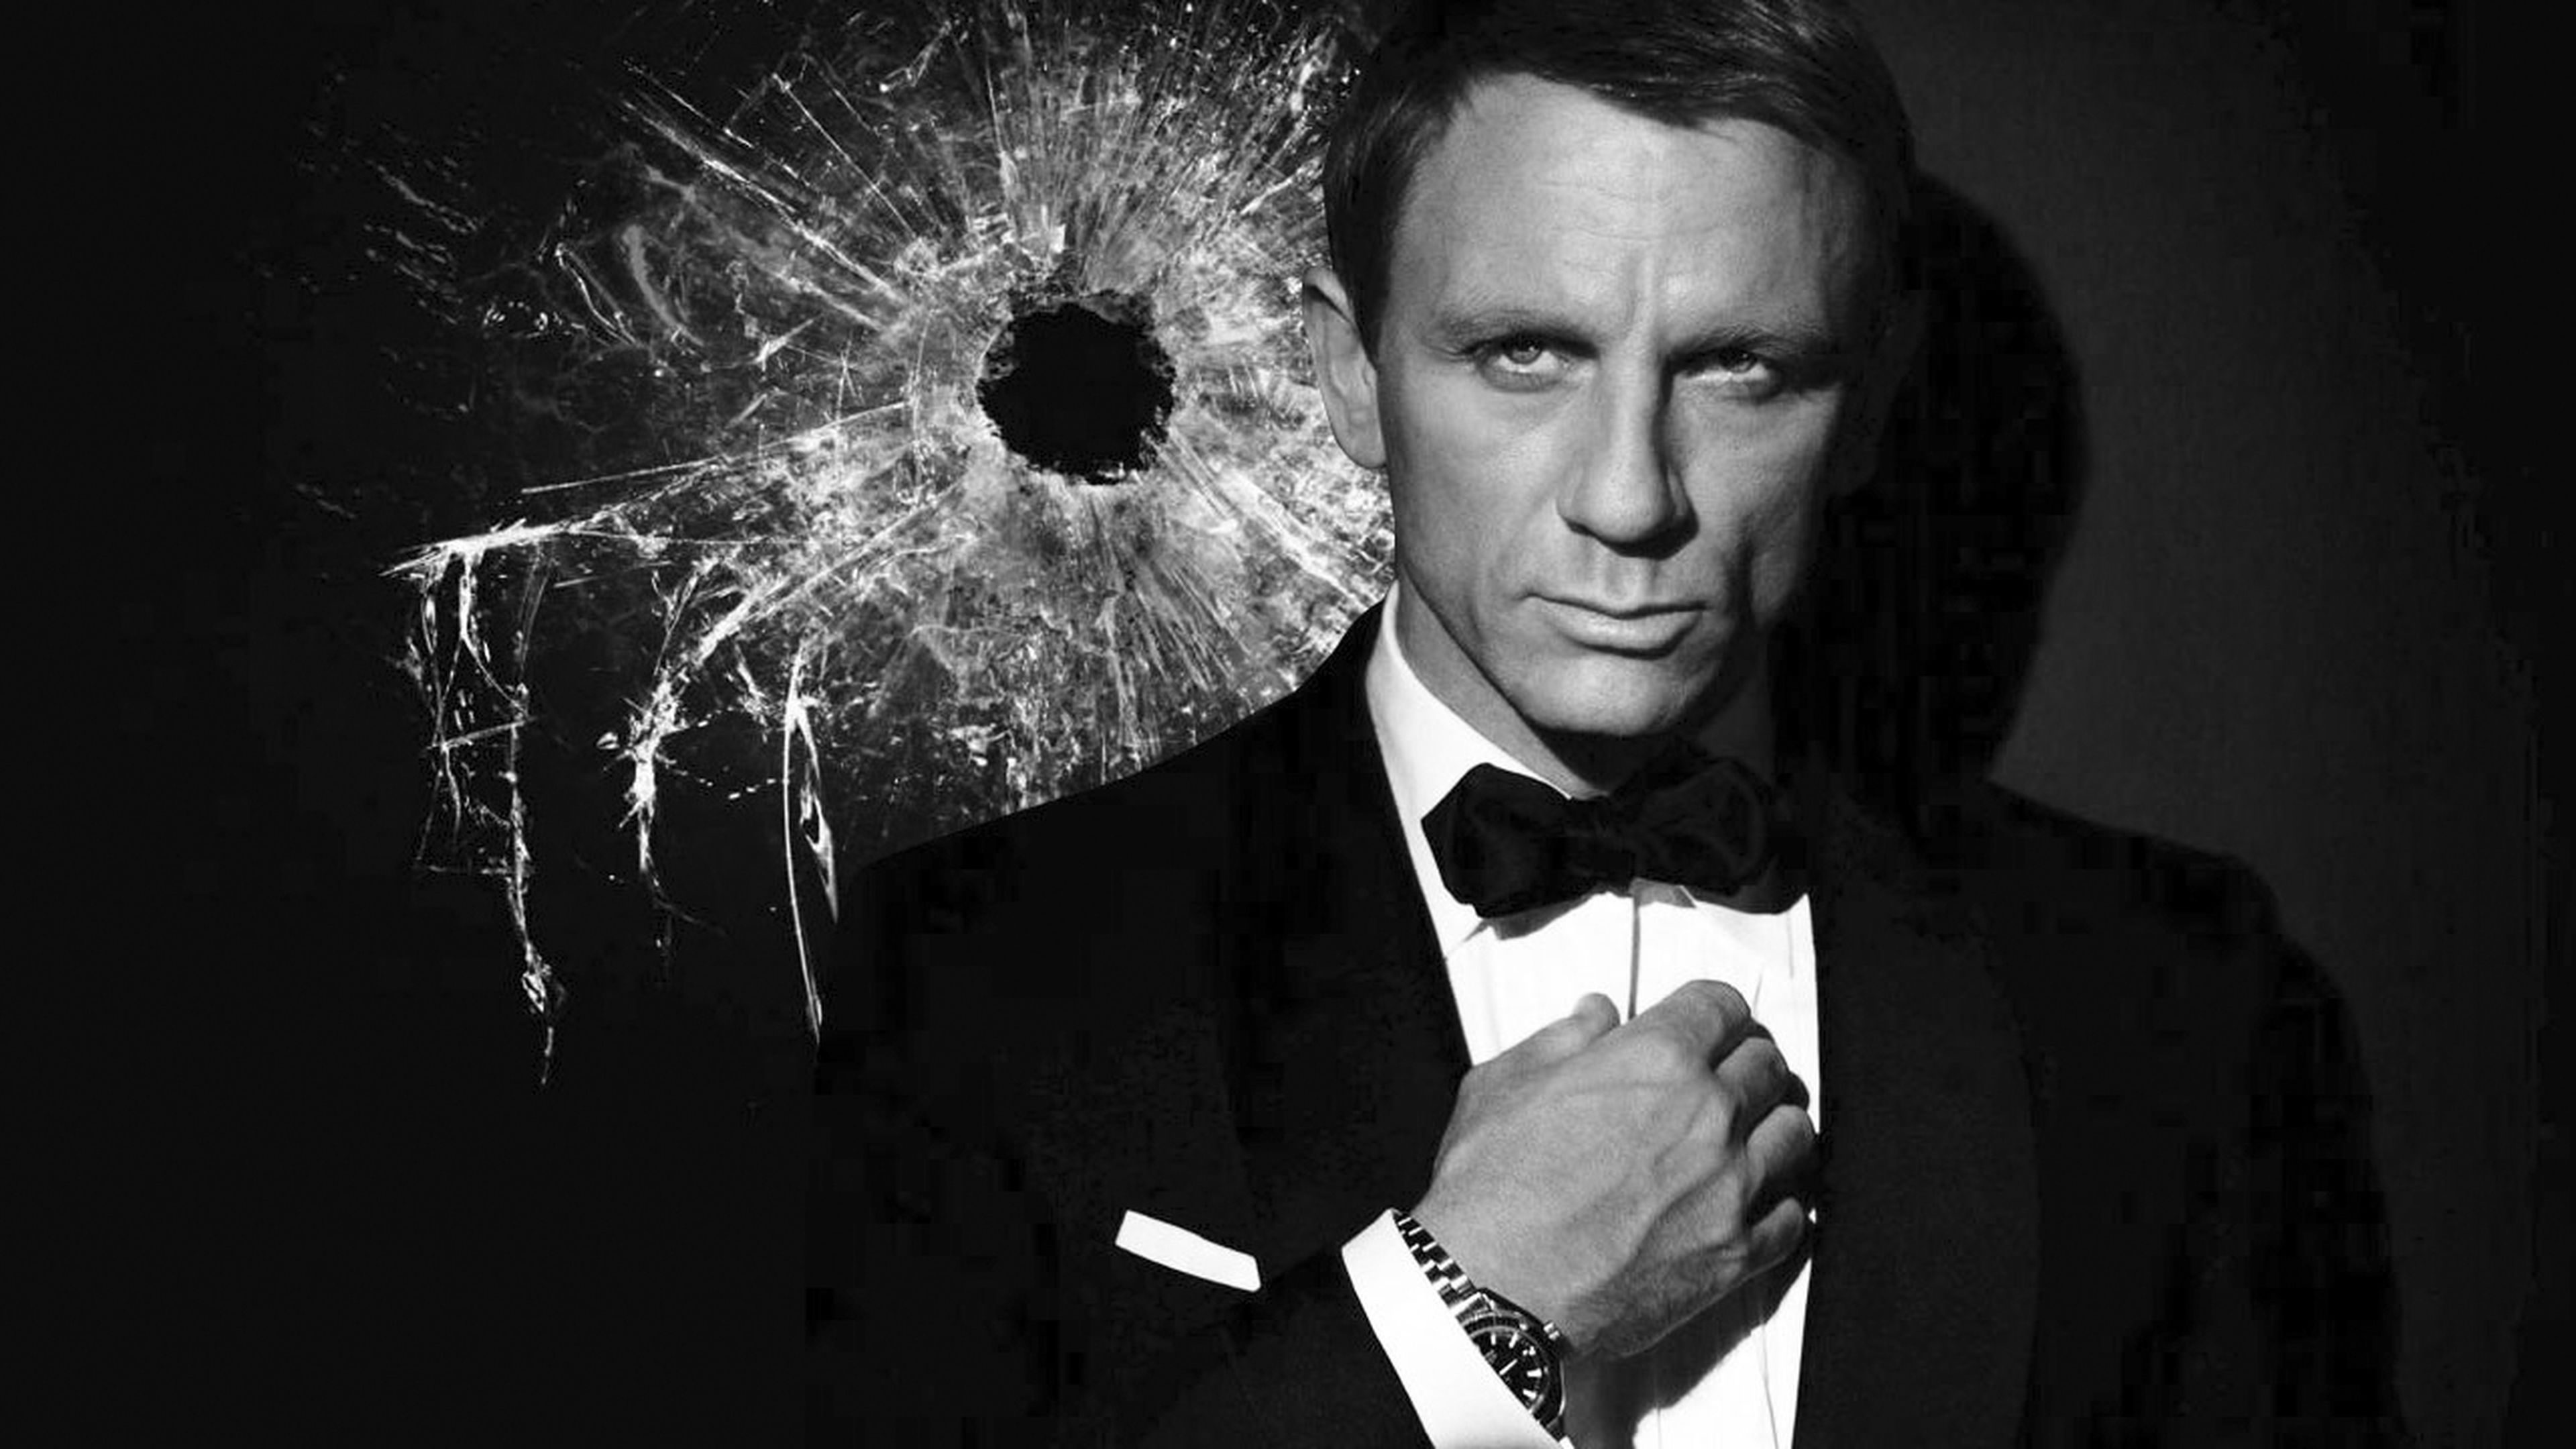 SPECTRE. Agente 007. Teaser Trailer en español. En cines 6 de noviembre.